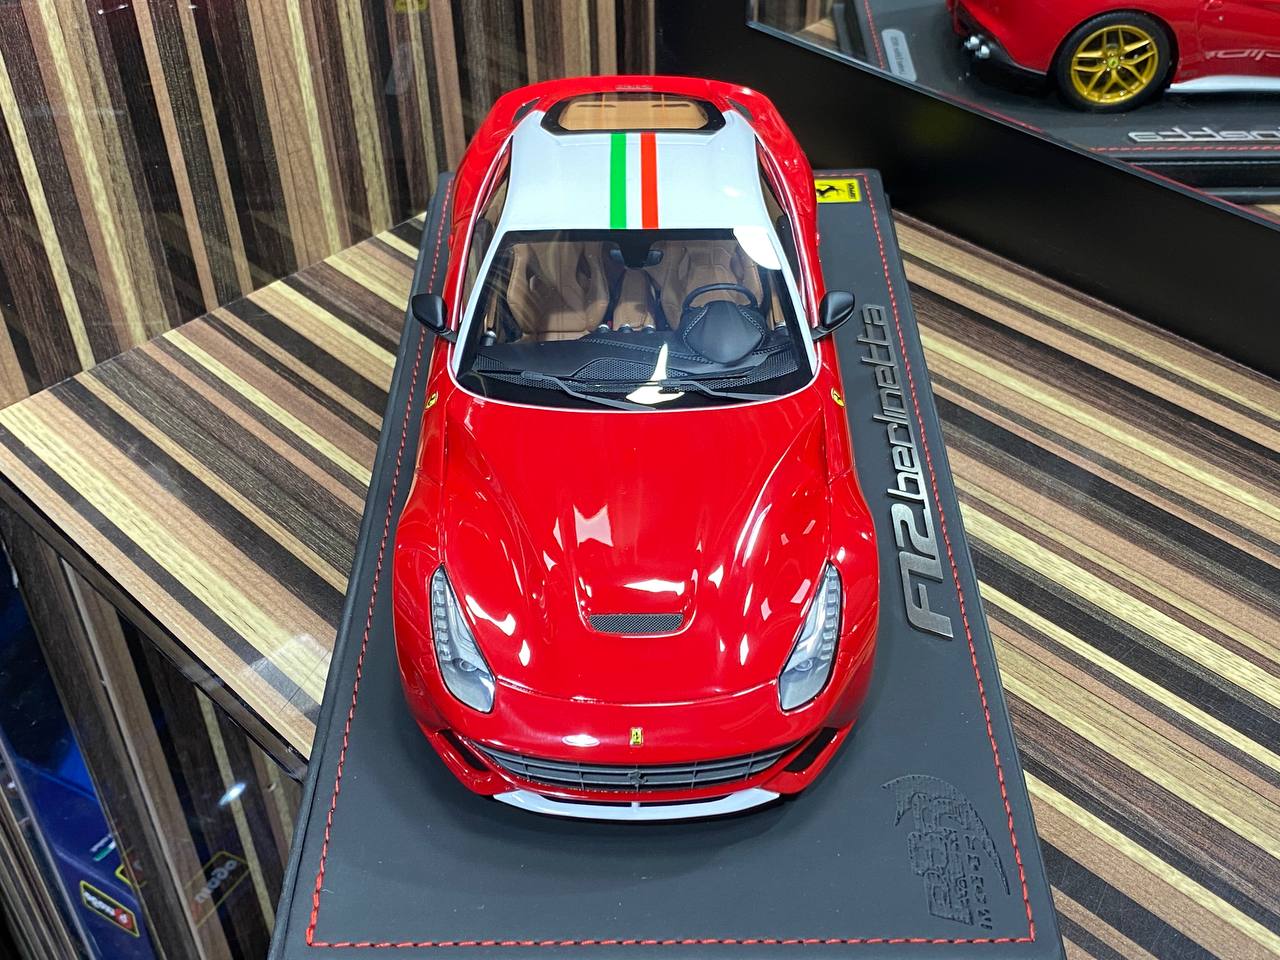 1/18 Diecast Ferrari F12 Berlinetta BBR Scale Model Car - Diecast model car by dturman.com - BBR|Sold in Dturman.com Dubai UAE.